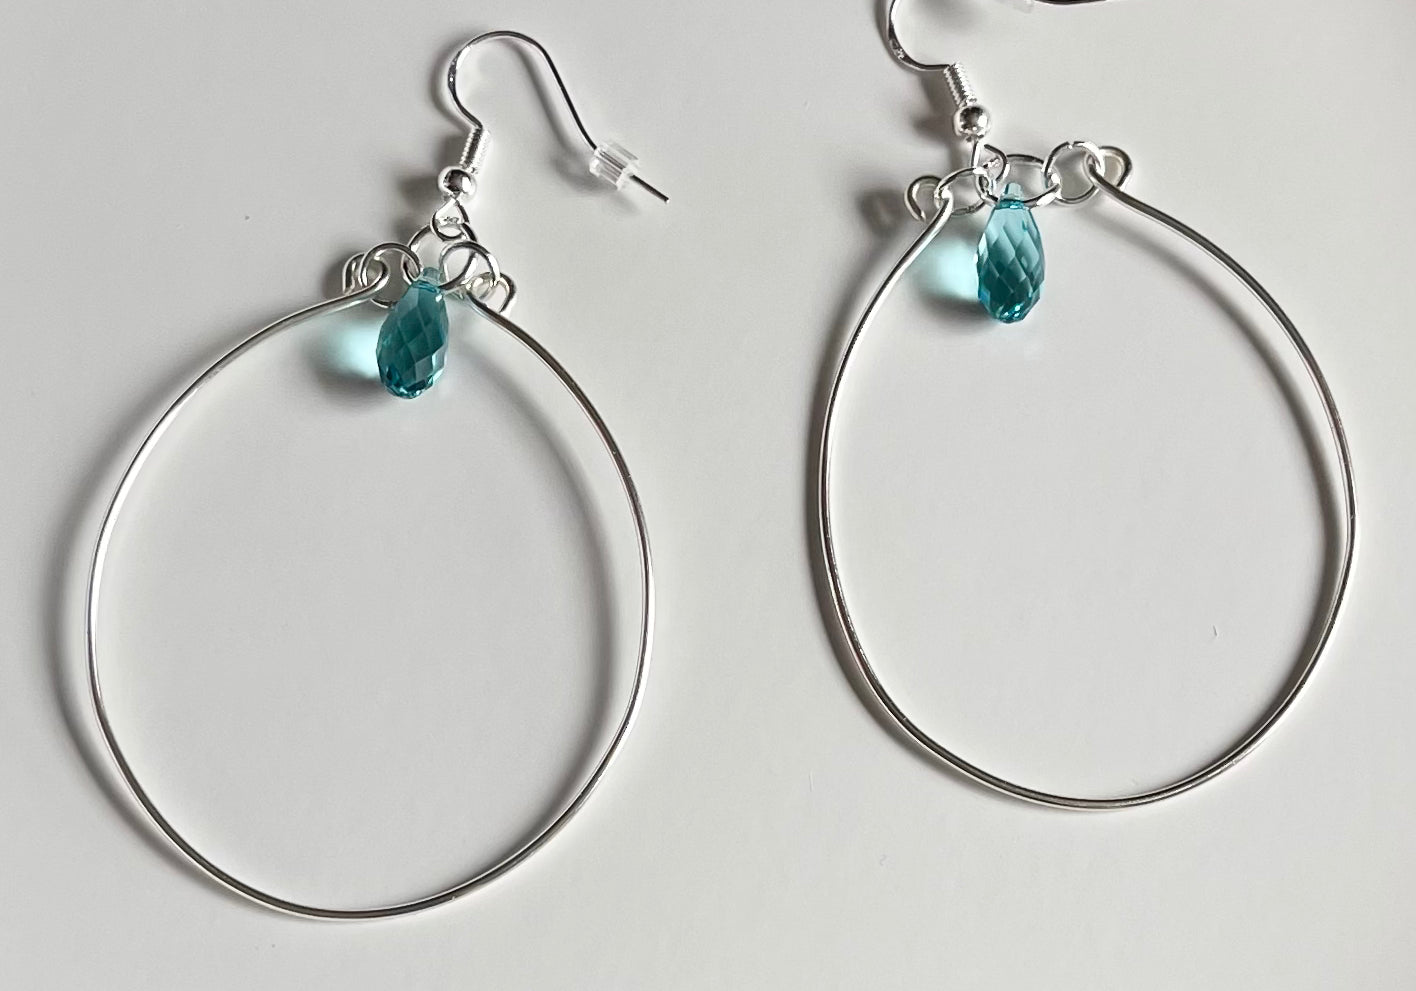 Silver wire hoop earrings with blue crystal